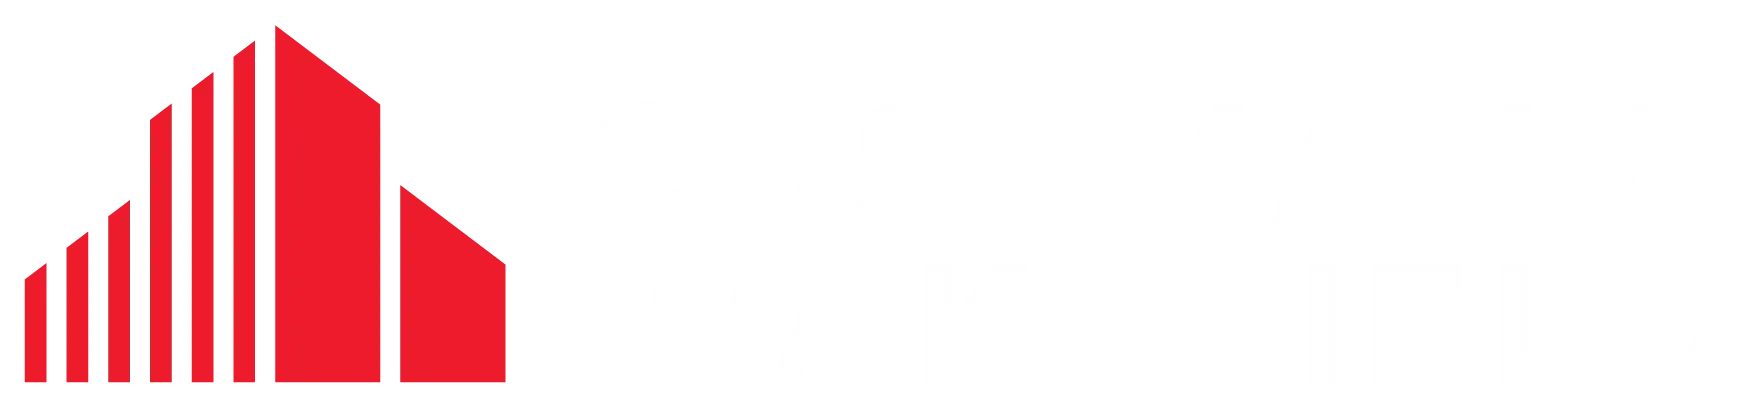 CUSHMAN&WAKEFIELD_logo